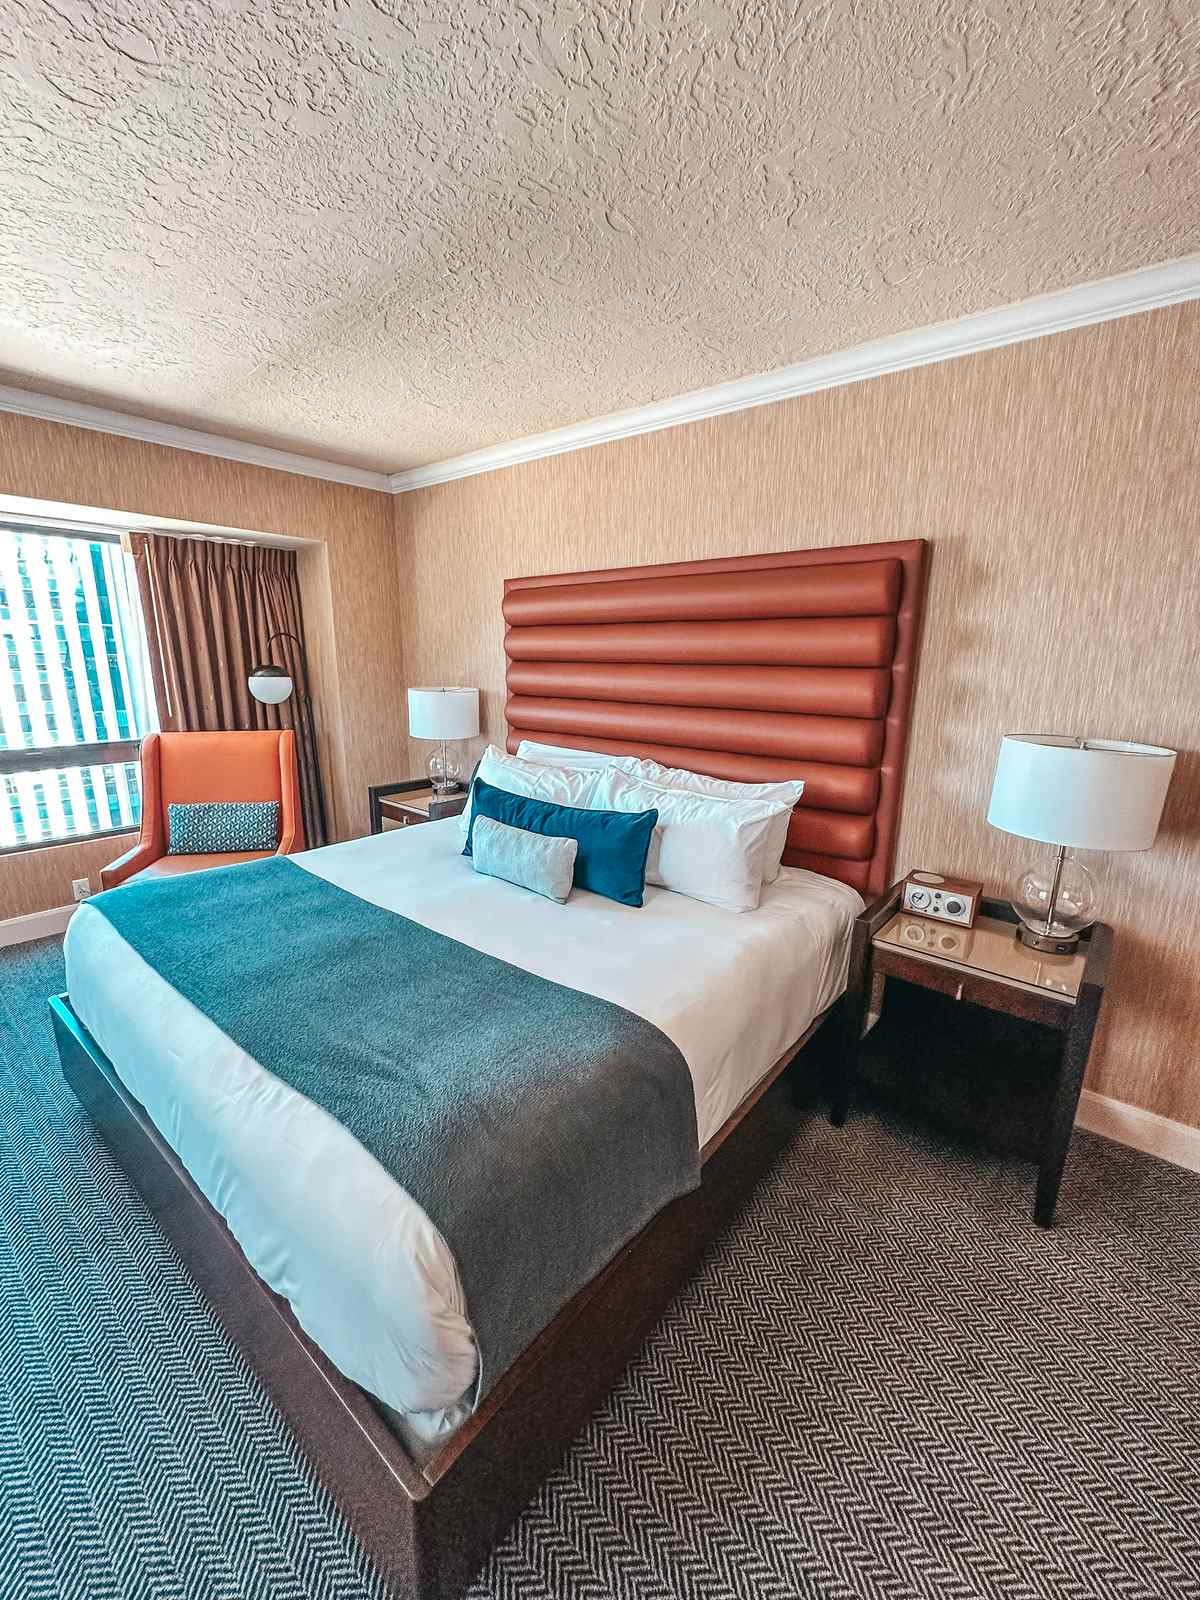 bedroom in Dossier hotel when you spend the weekend in Portland 